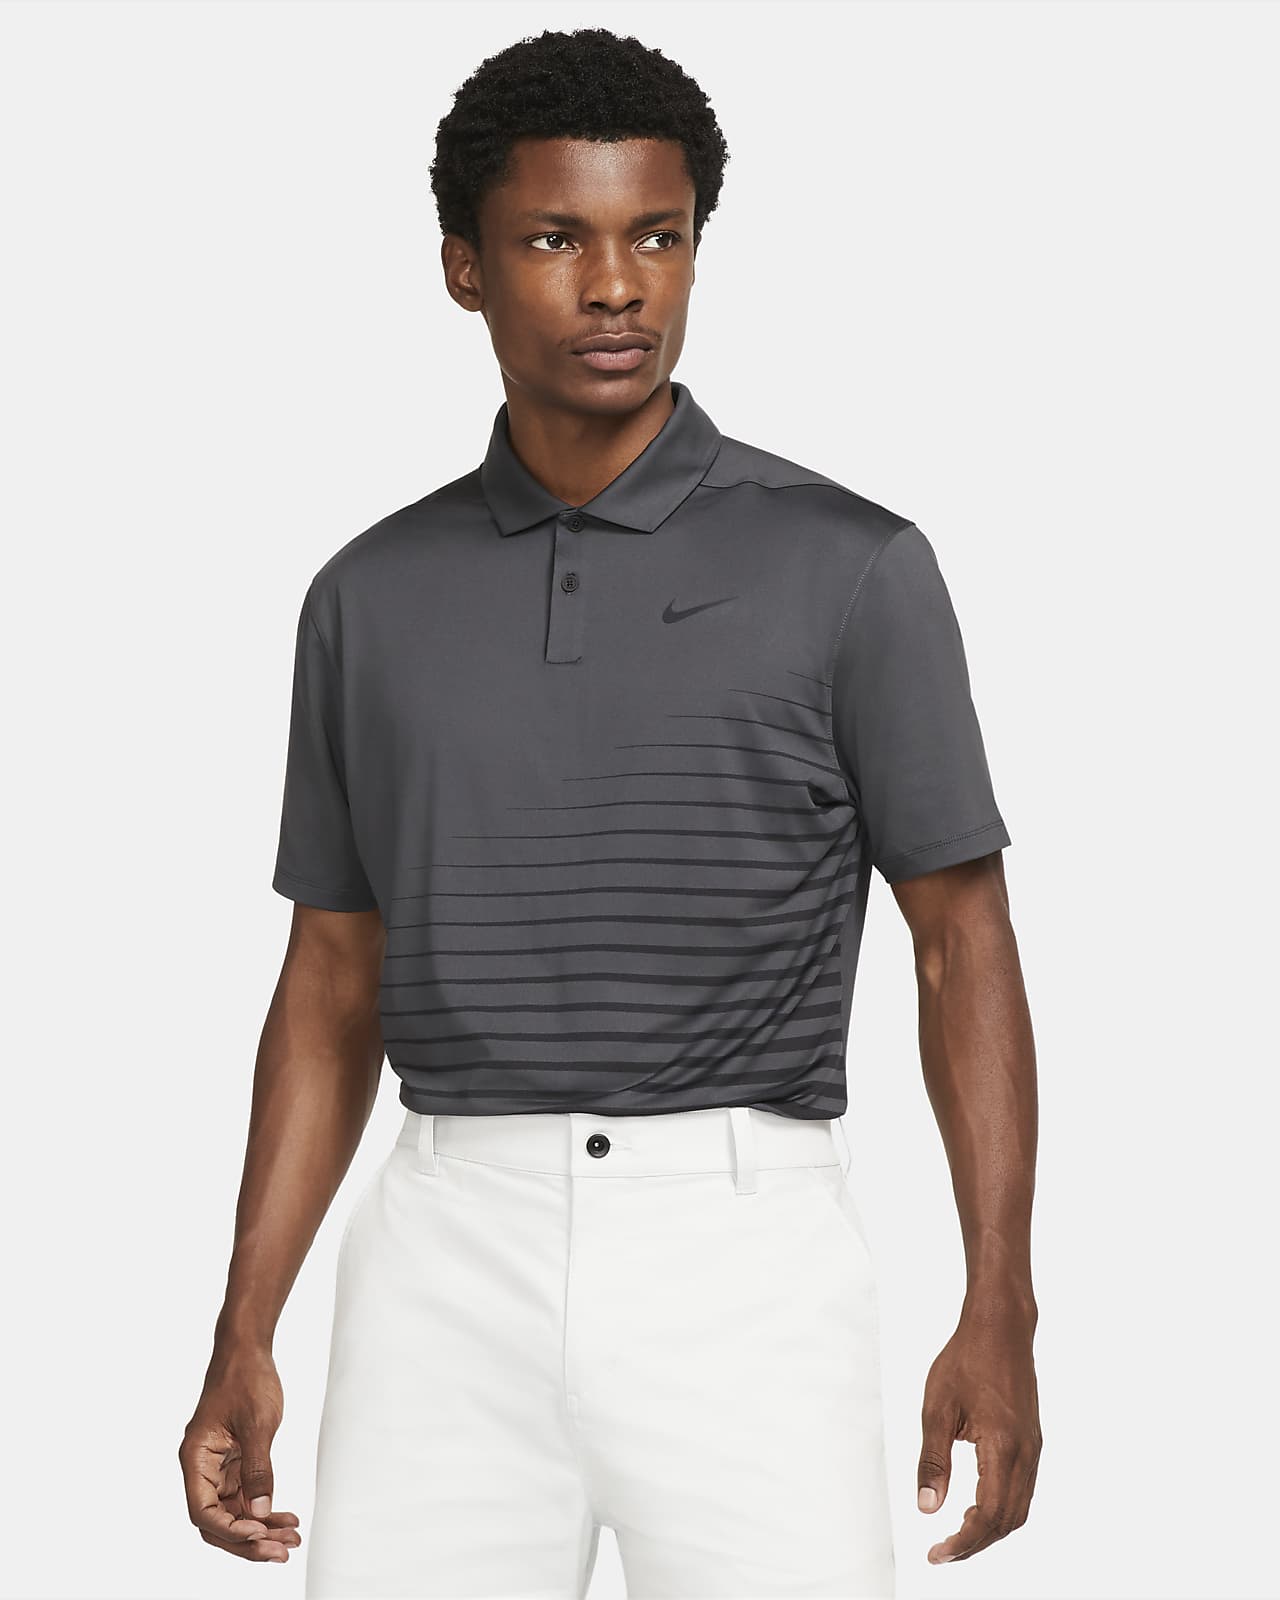 Nike Dri-FIT Vapor Men's Graphic Golf 